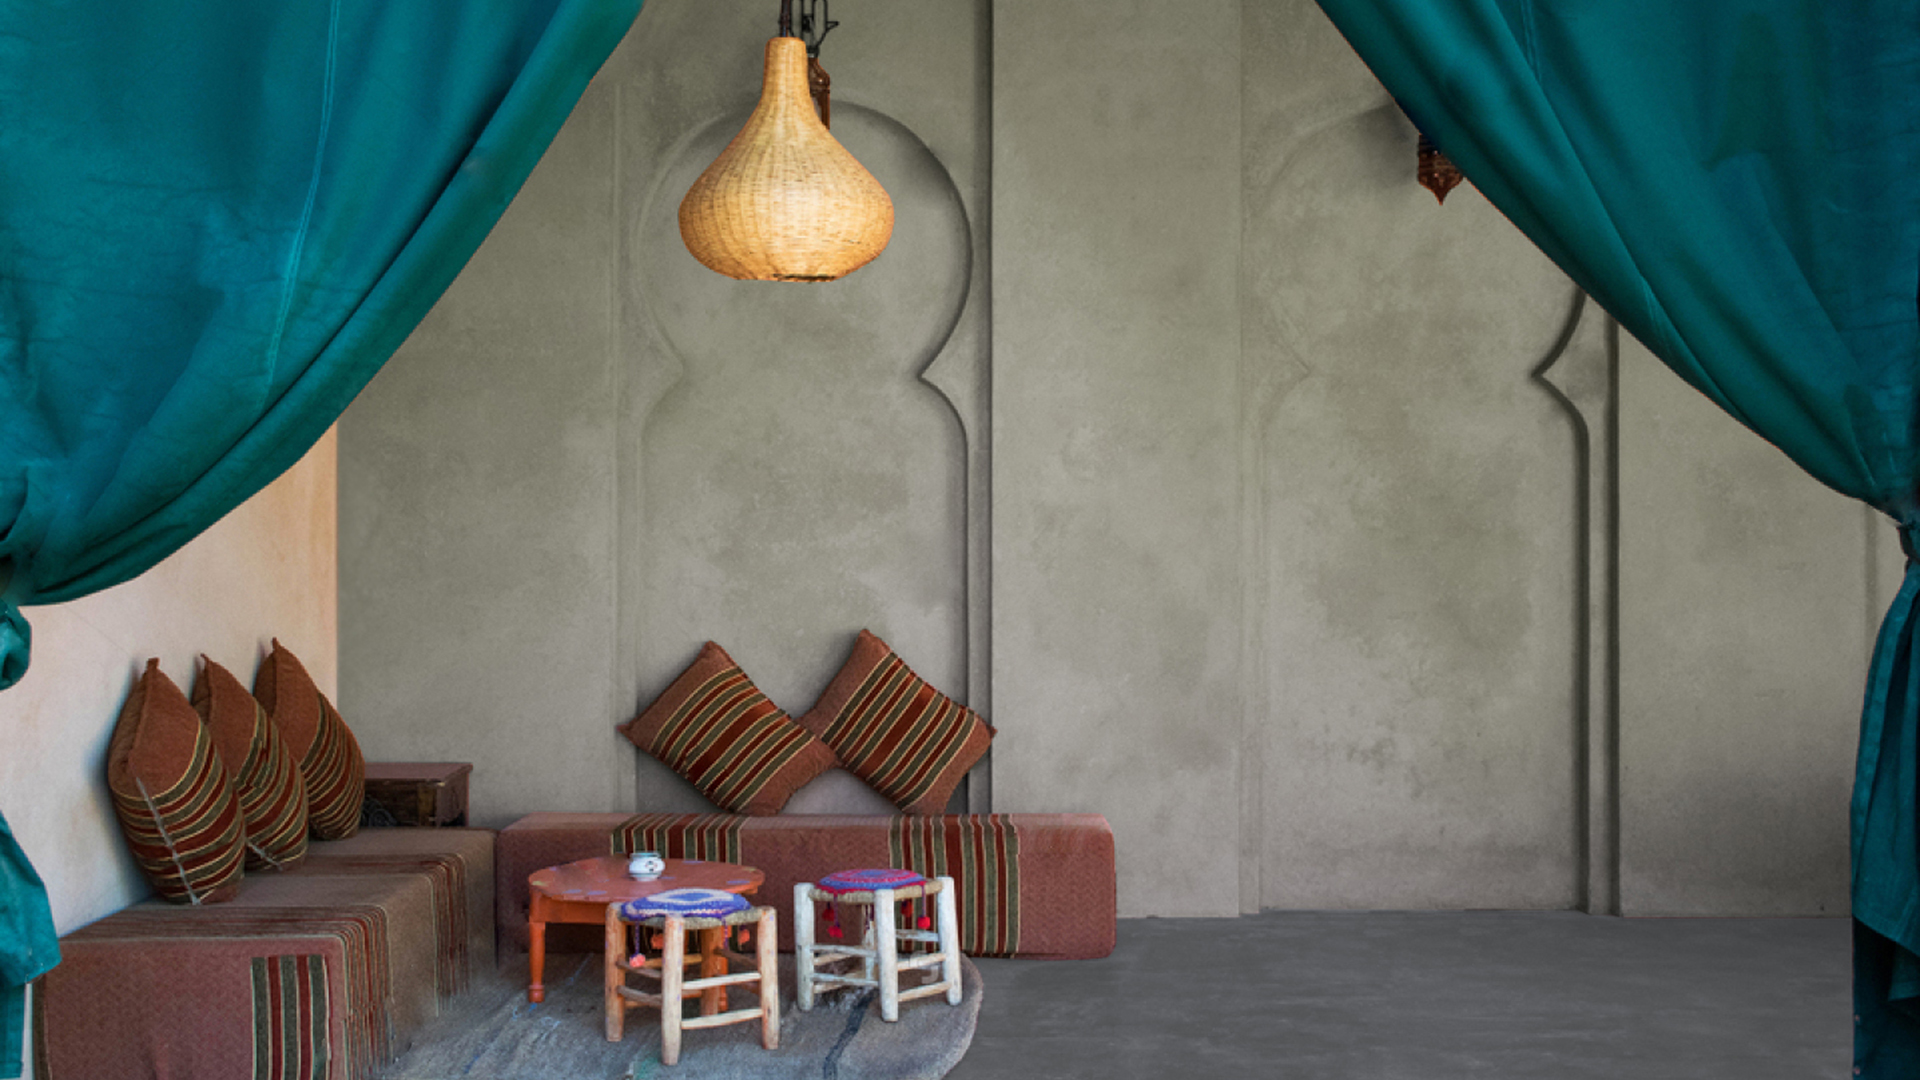 Marokański salon z tadelaktem na podłodze i ścianach